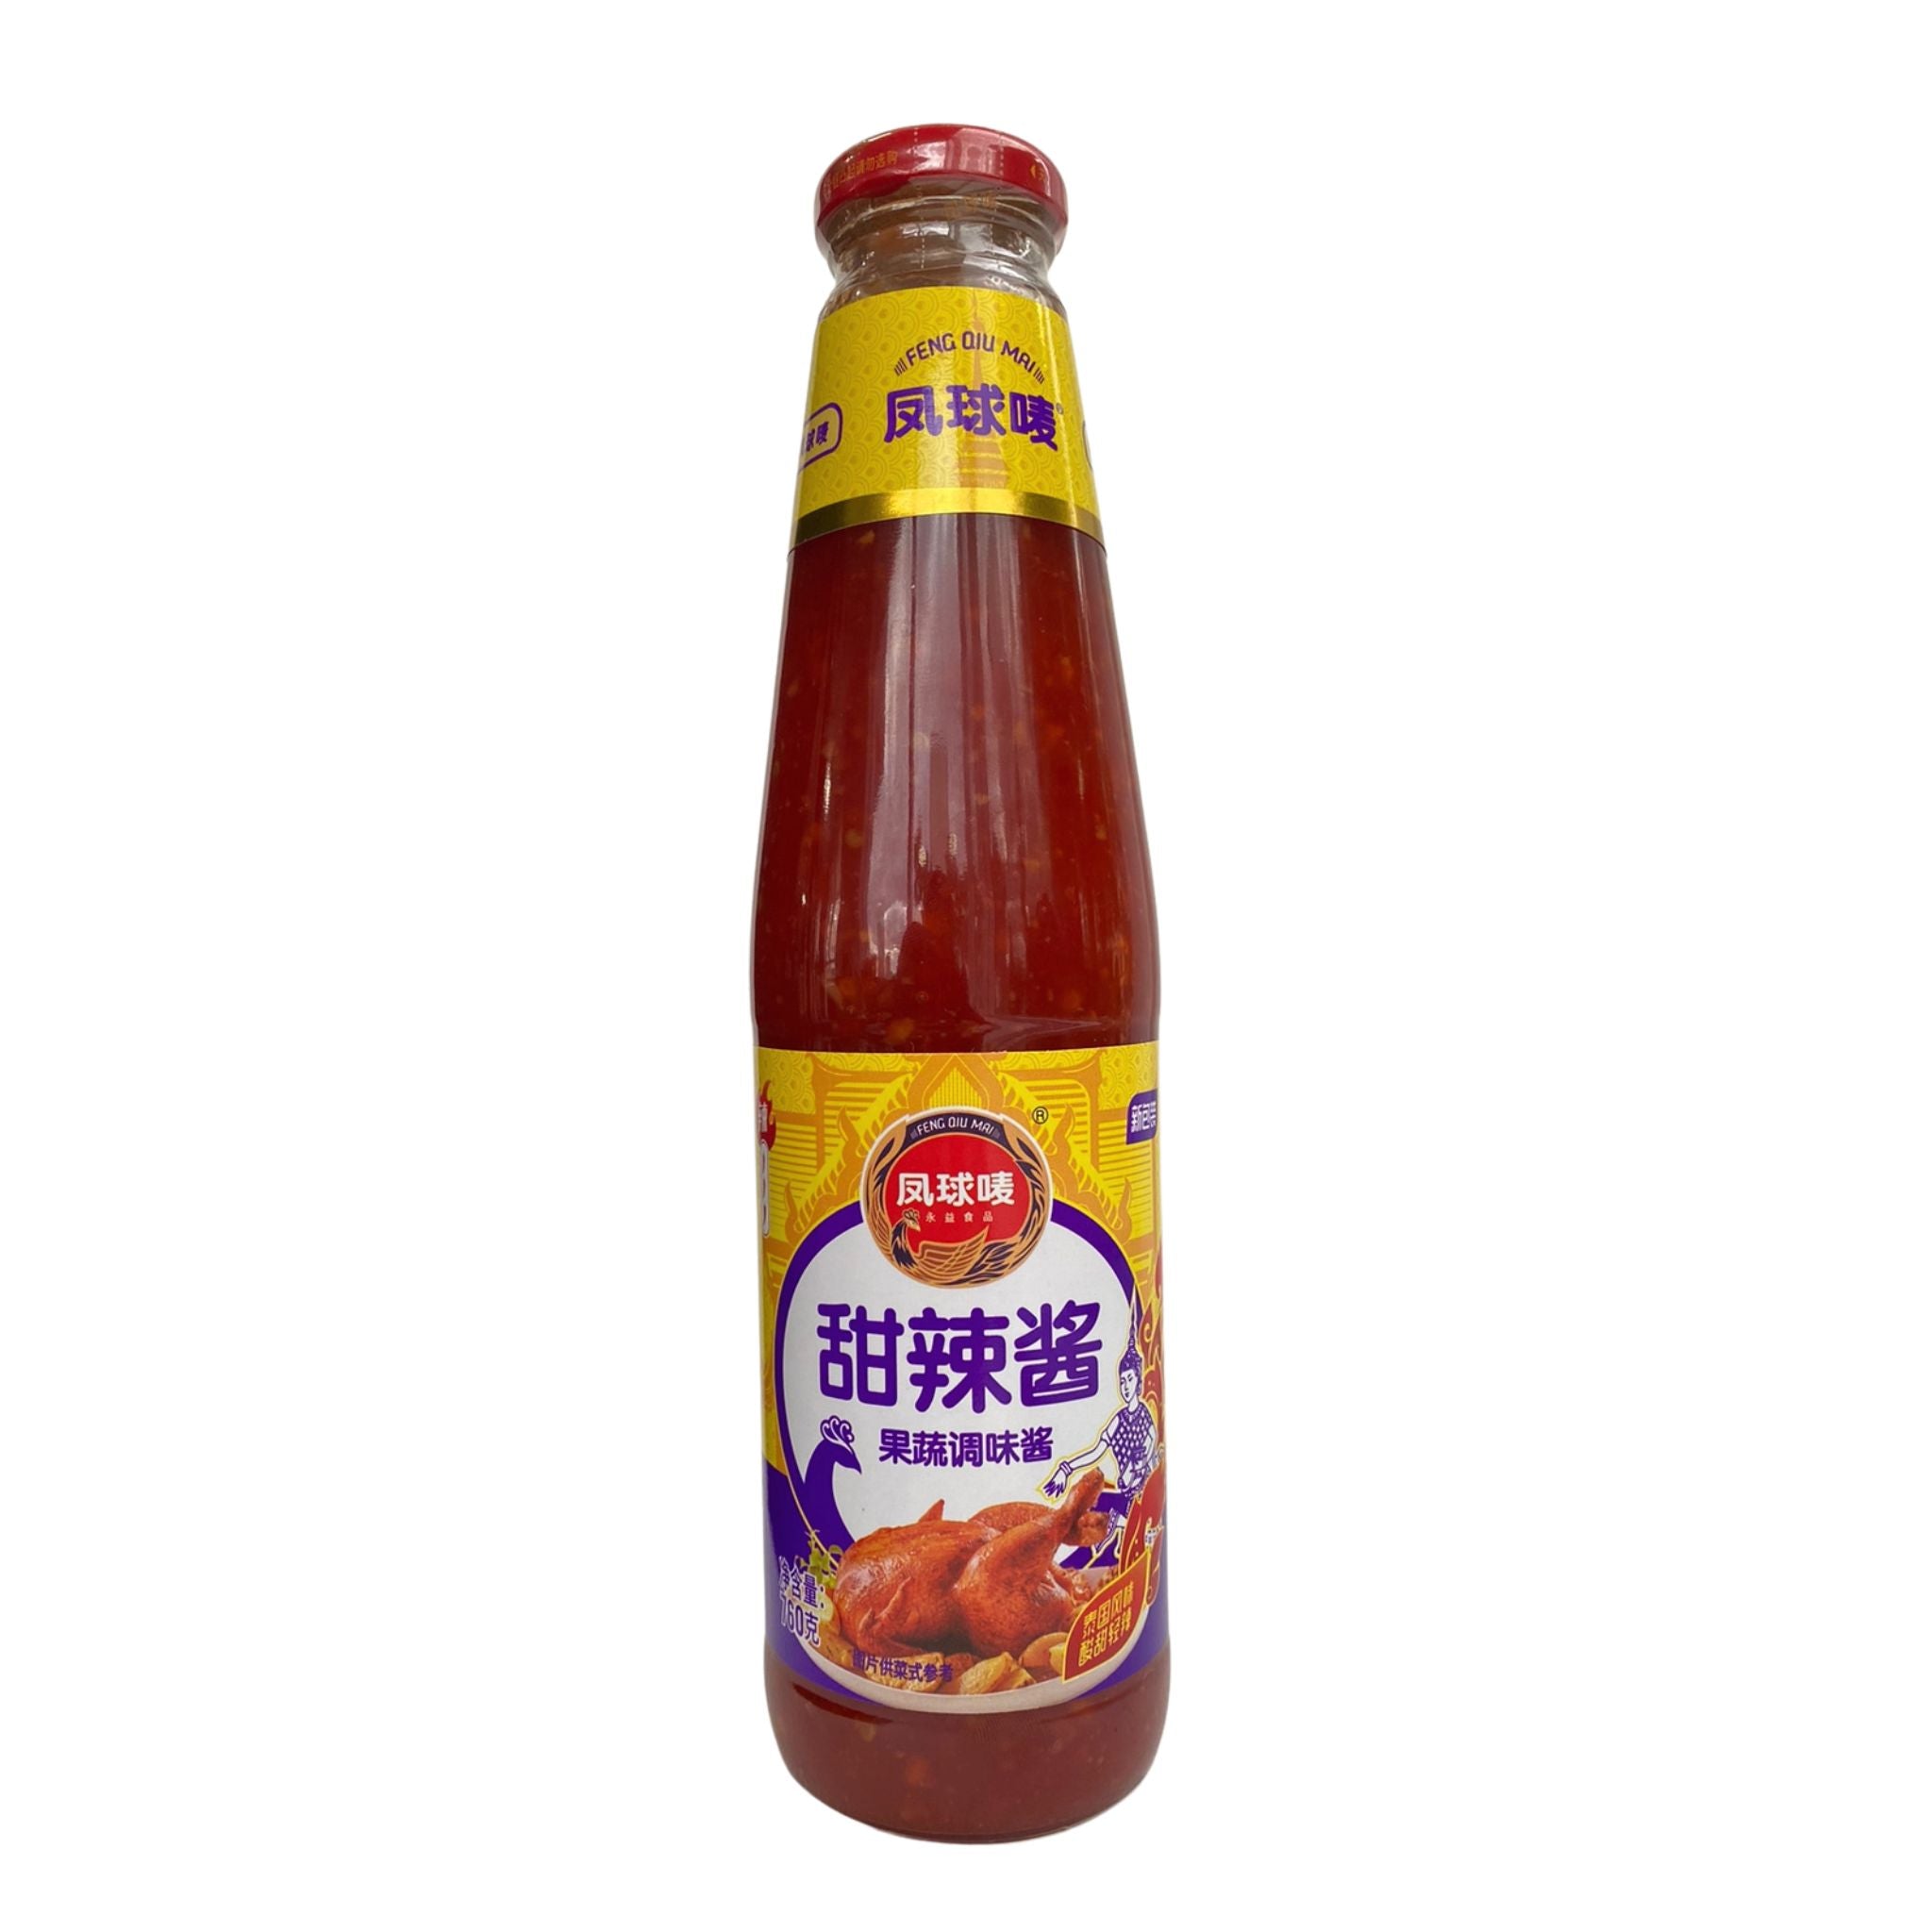 Molho de pimenta doce (Sweet Chilli) Feng Qiu Mai 760ml